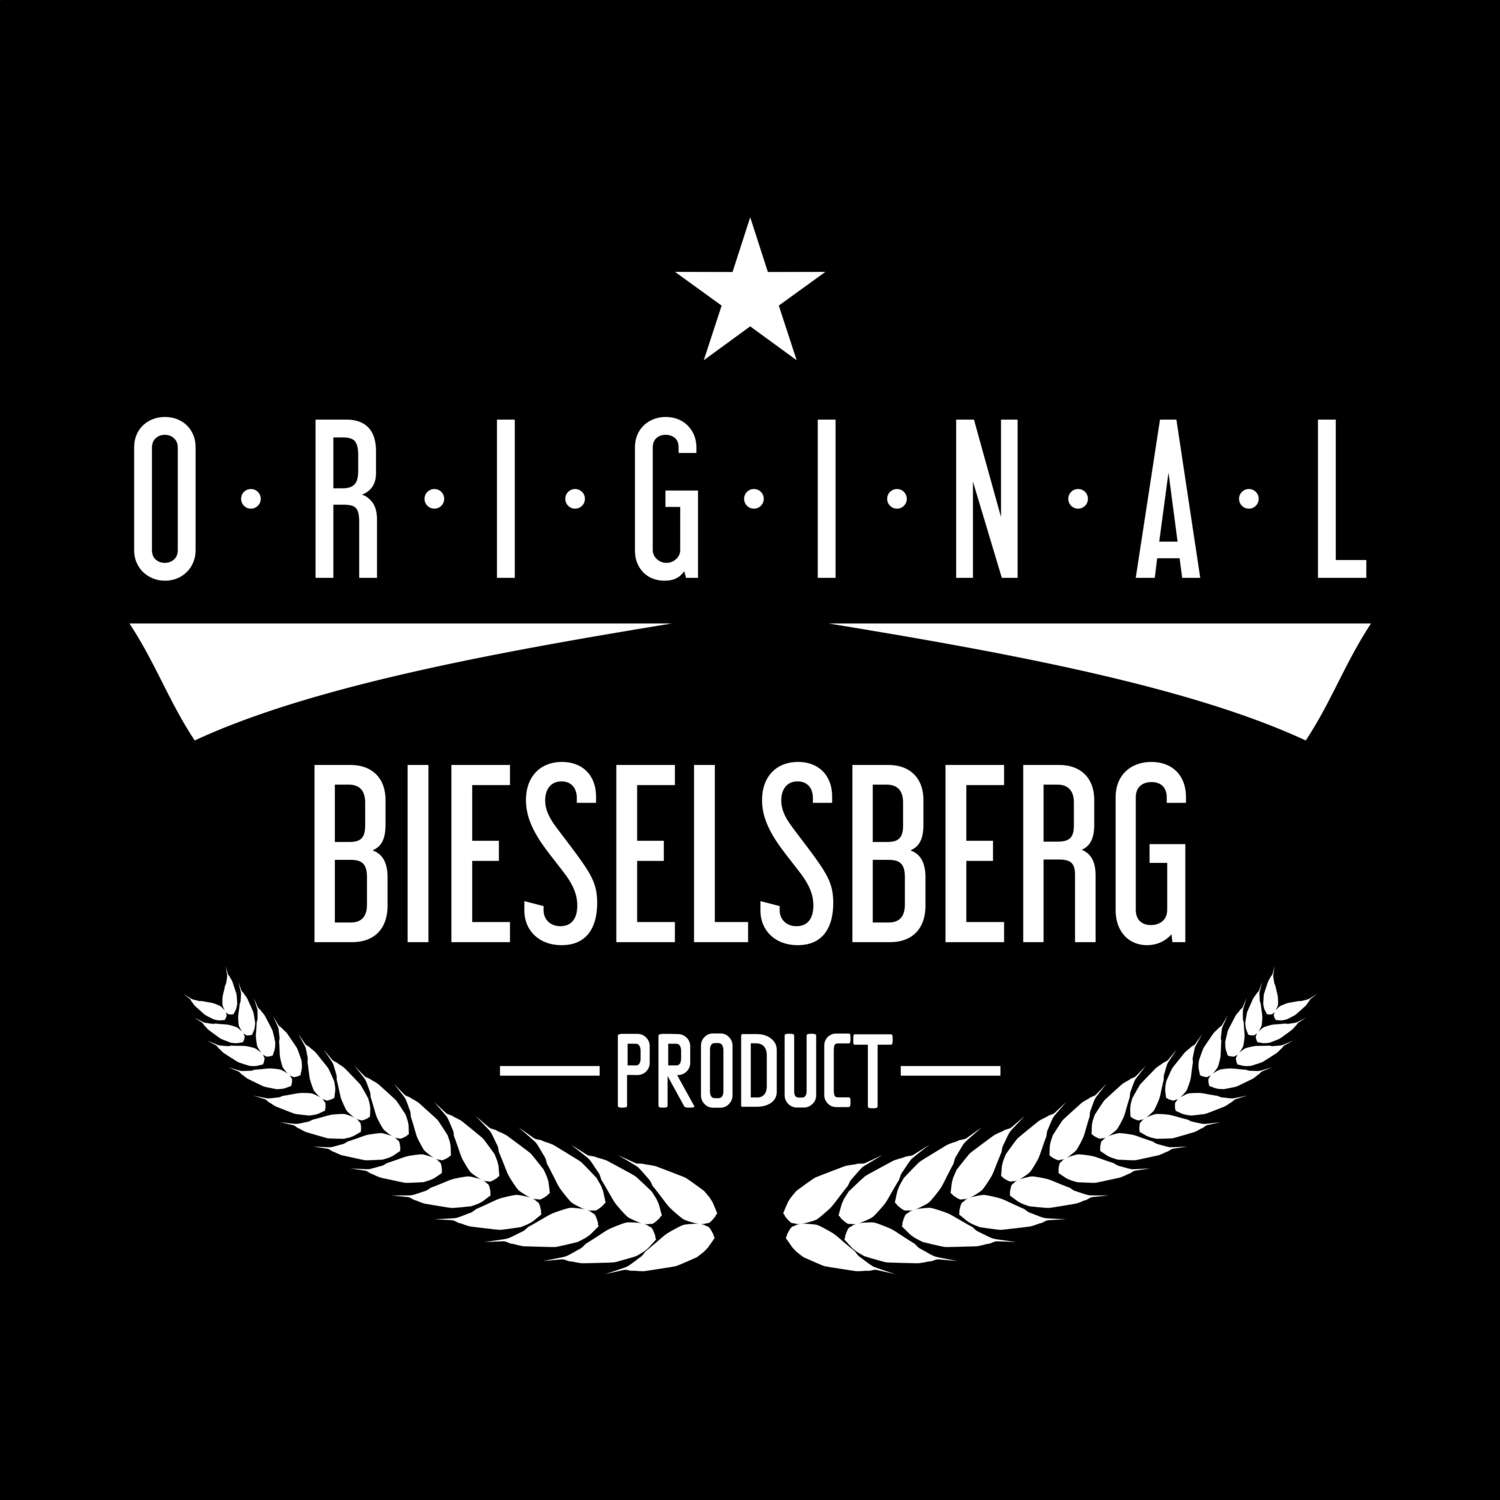 Bieselsberg T-Shirt »Original Product«